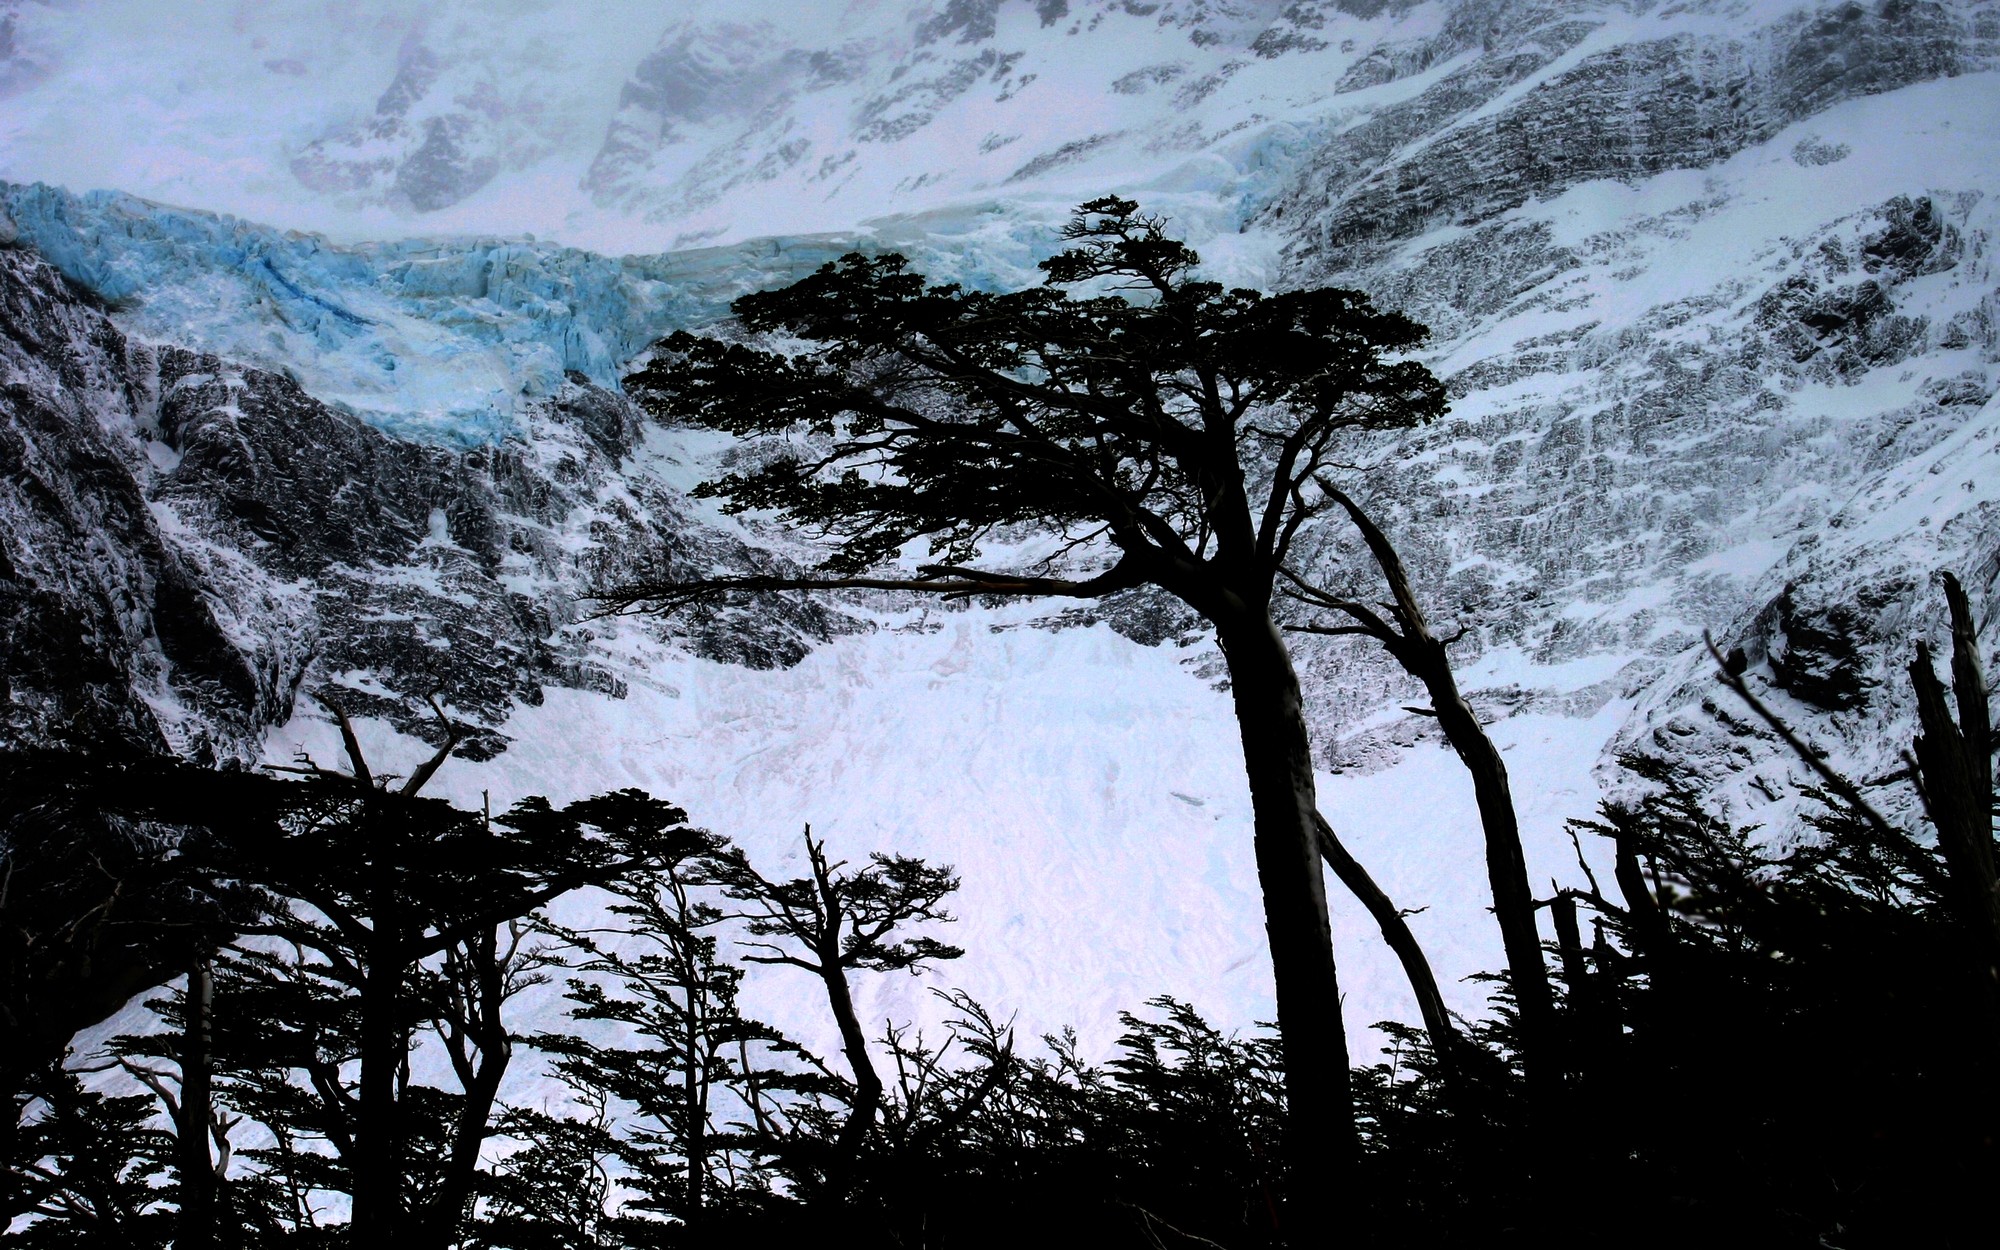 General 2000x1250 landscape nature mountains snow glacier winter trees Torres del Paine Chile mist silhouette South America